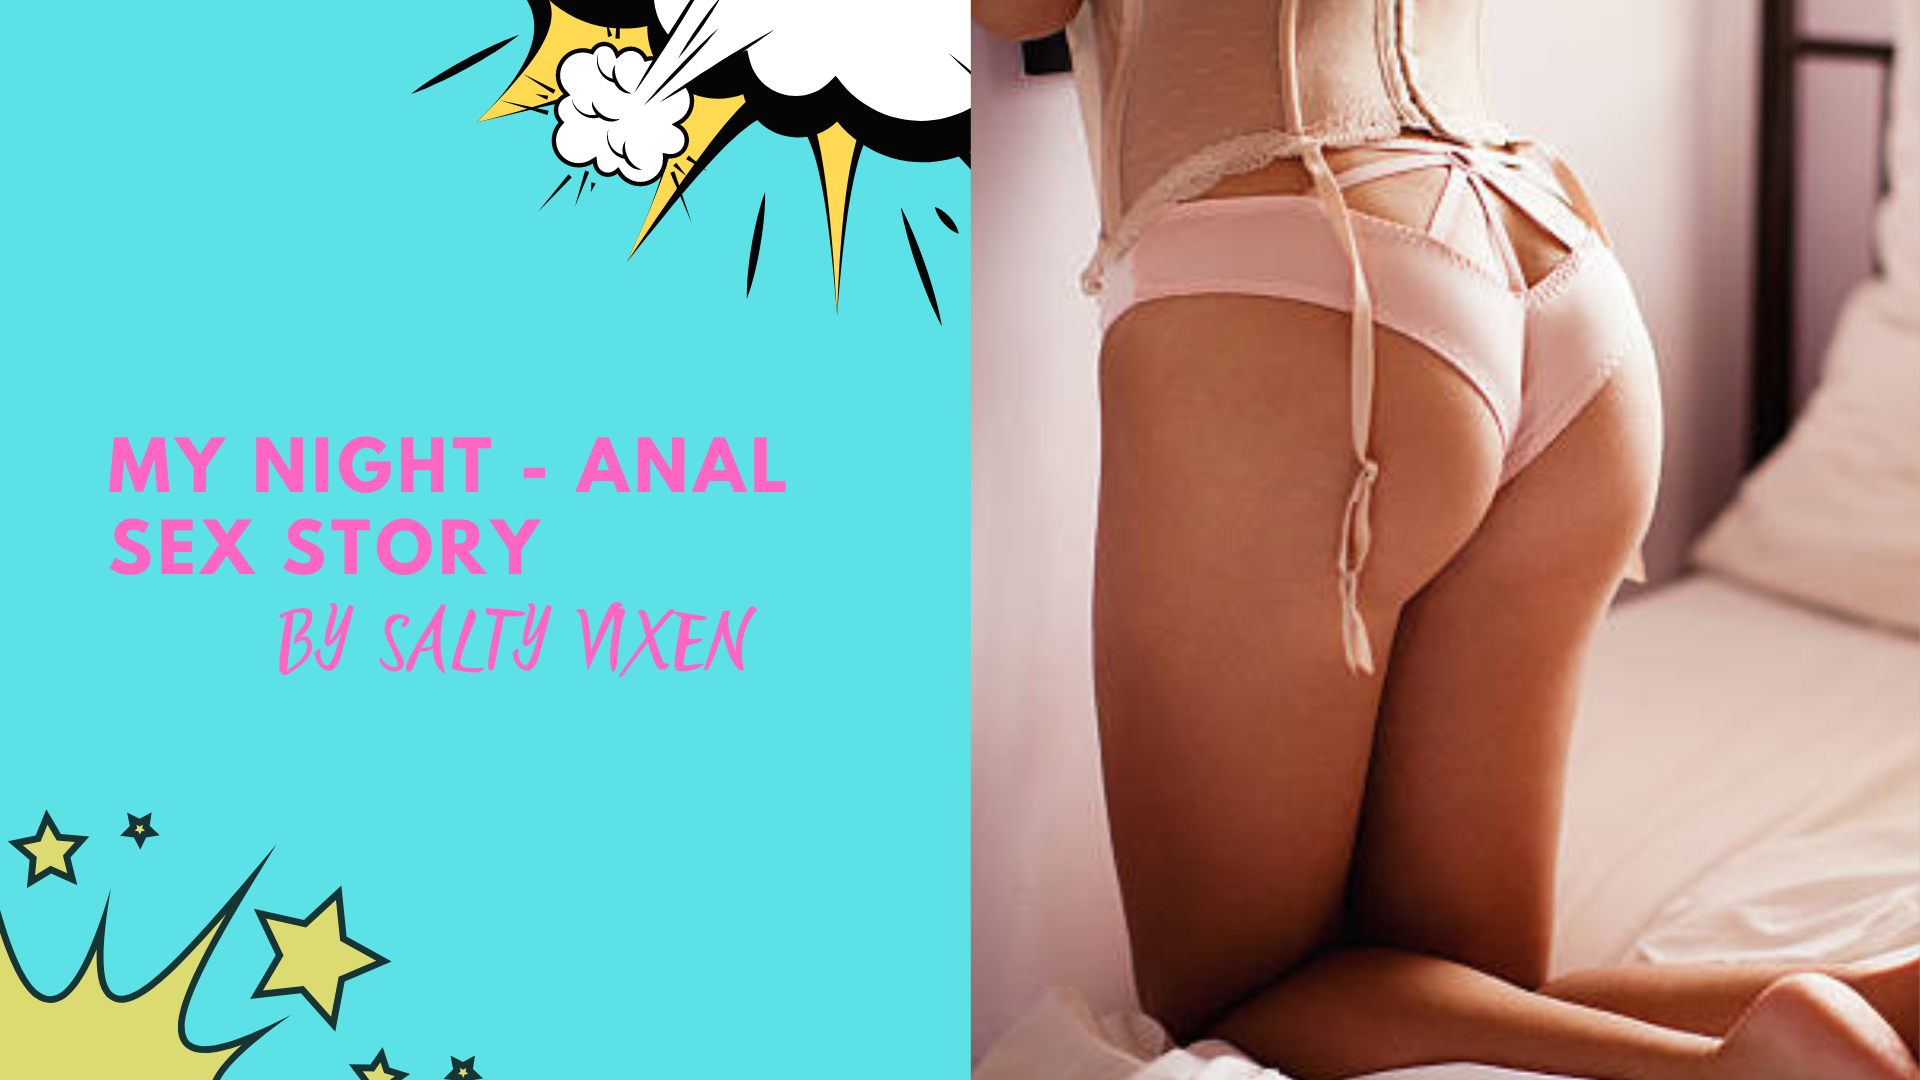 art avitia recommends Her First Anal Sex Stories